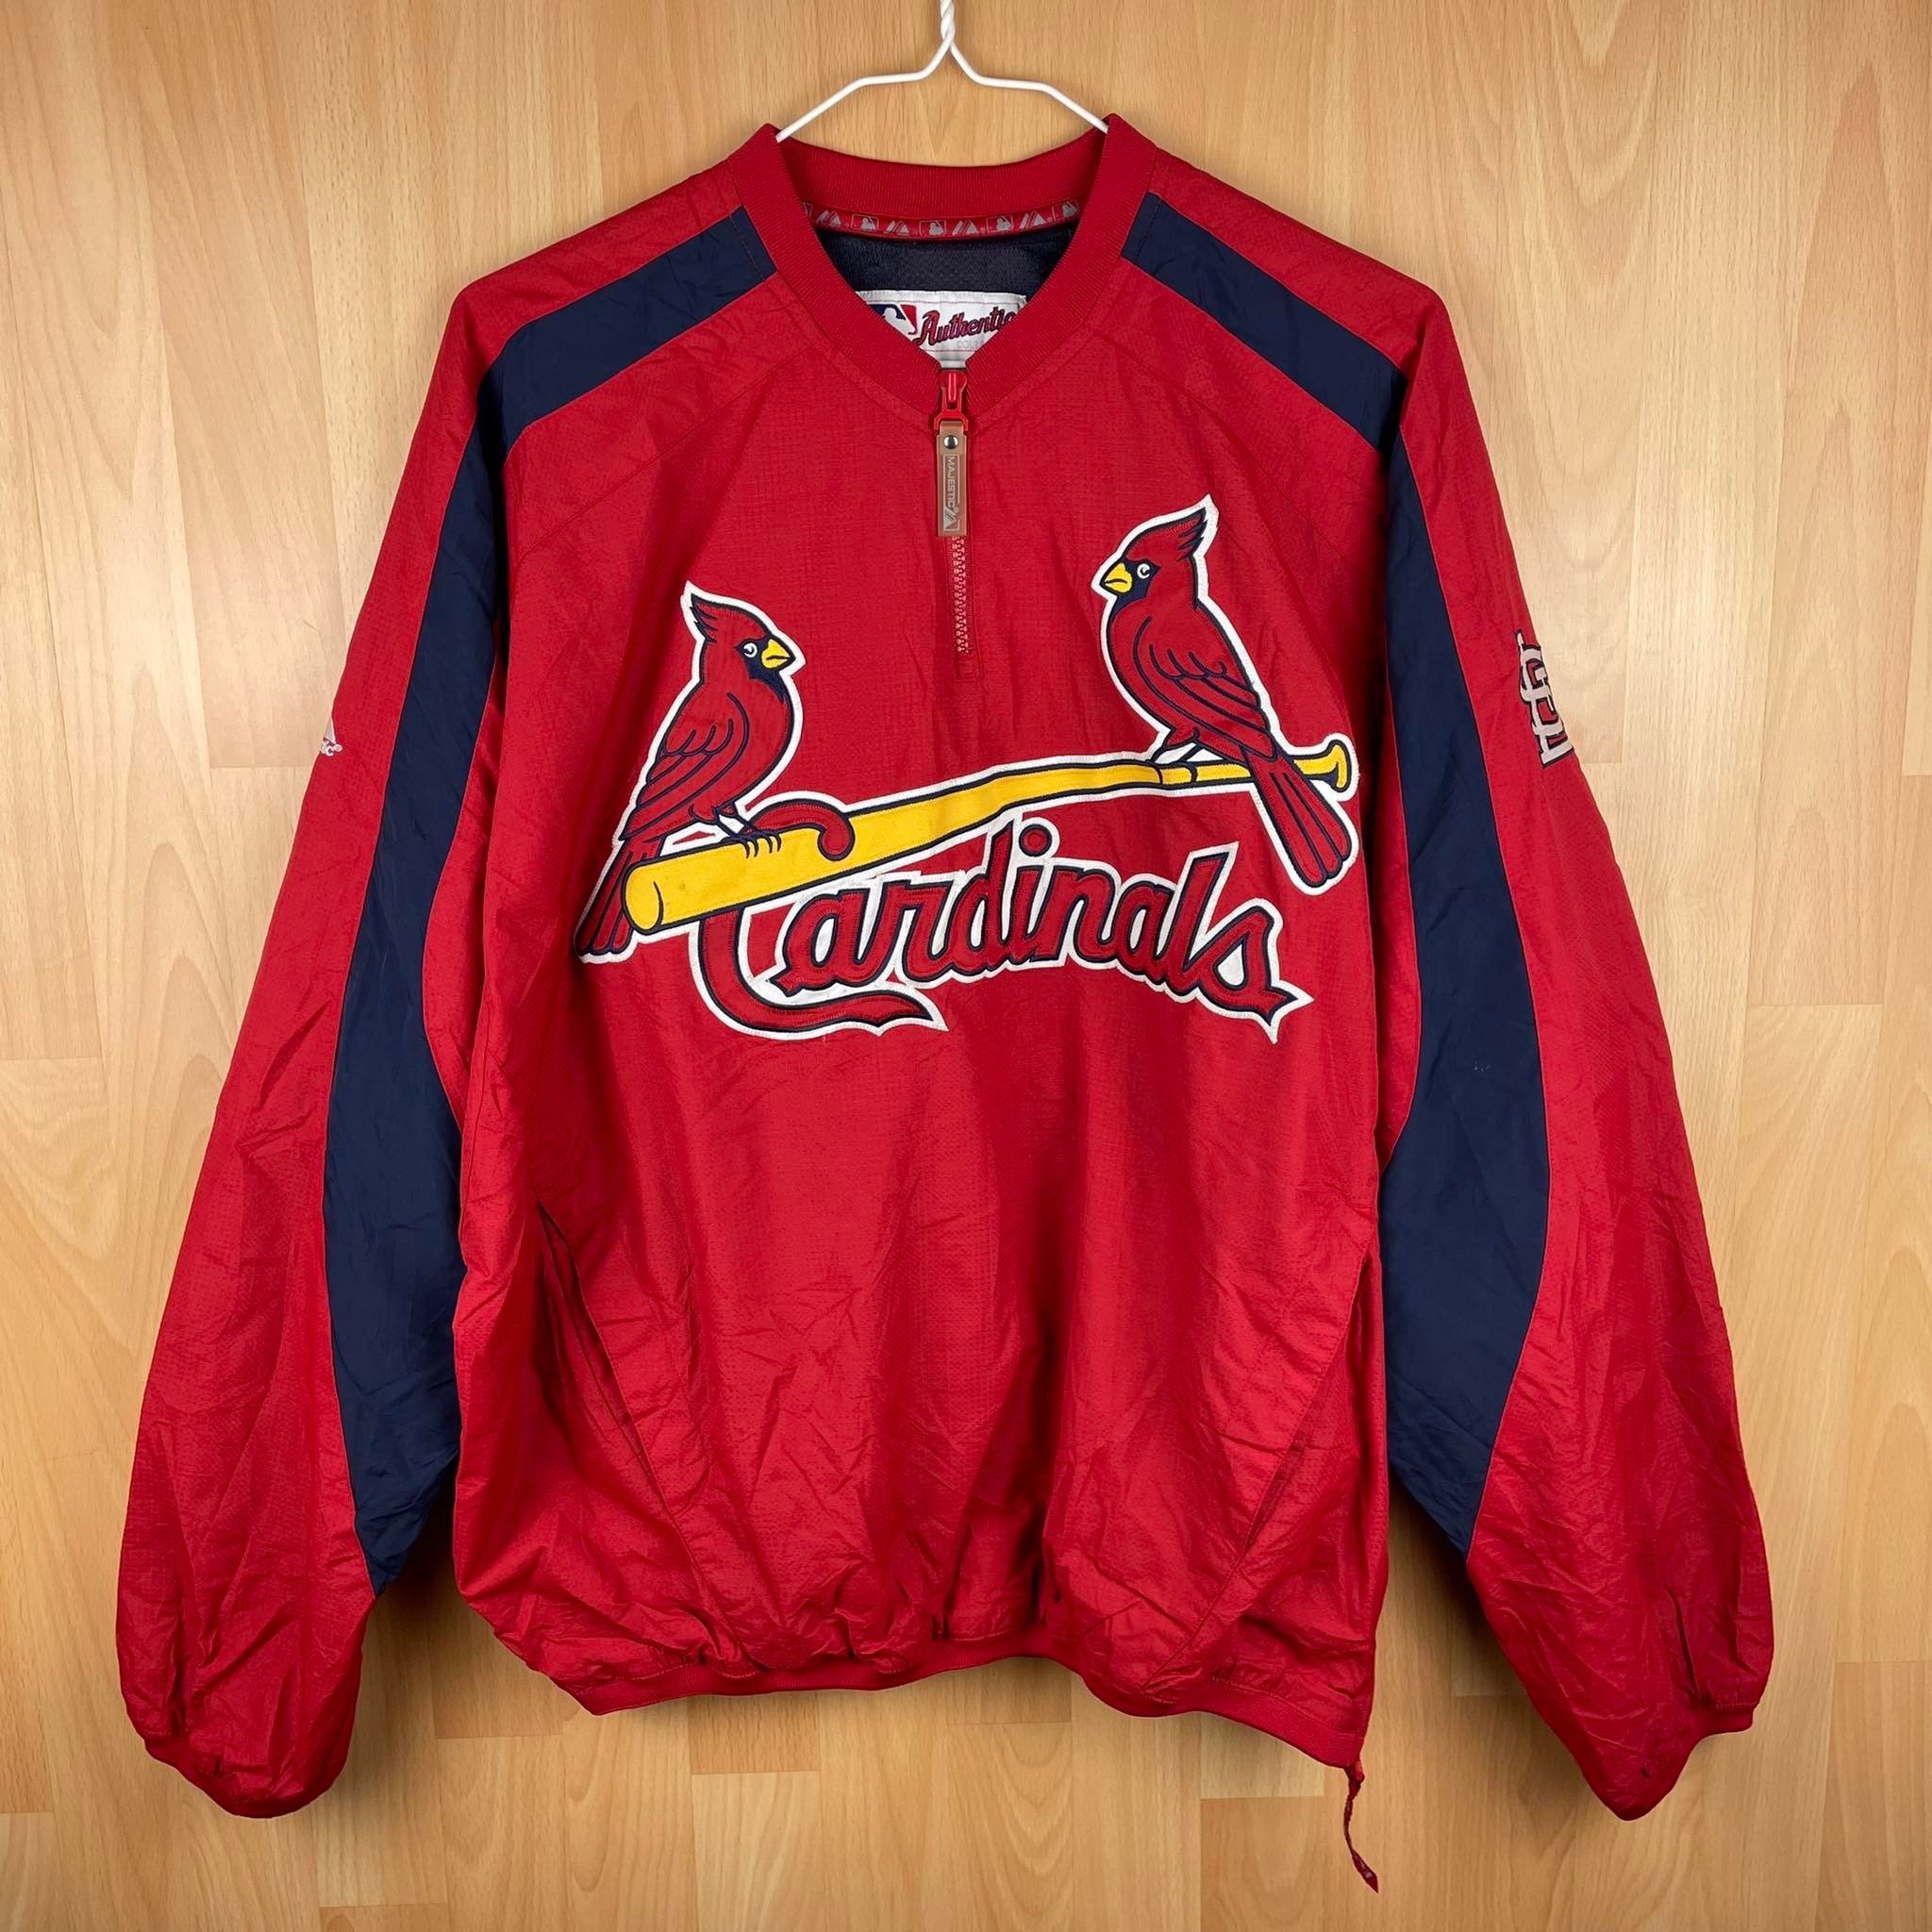 Nike Youth Large Vintage Style St Louis Cardinals Full Zip Up Hoodie Jacket